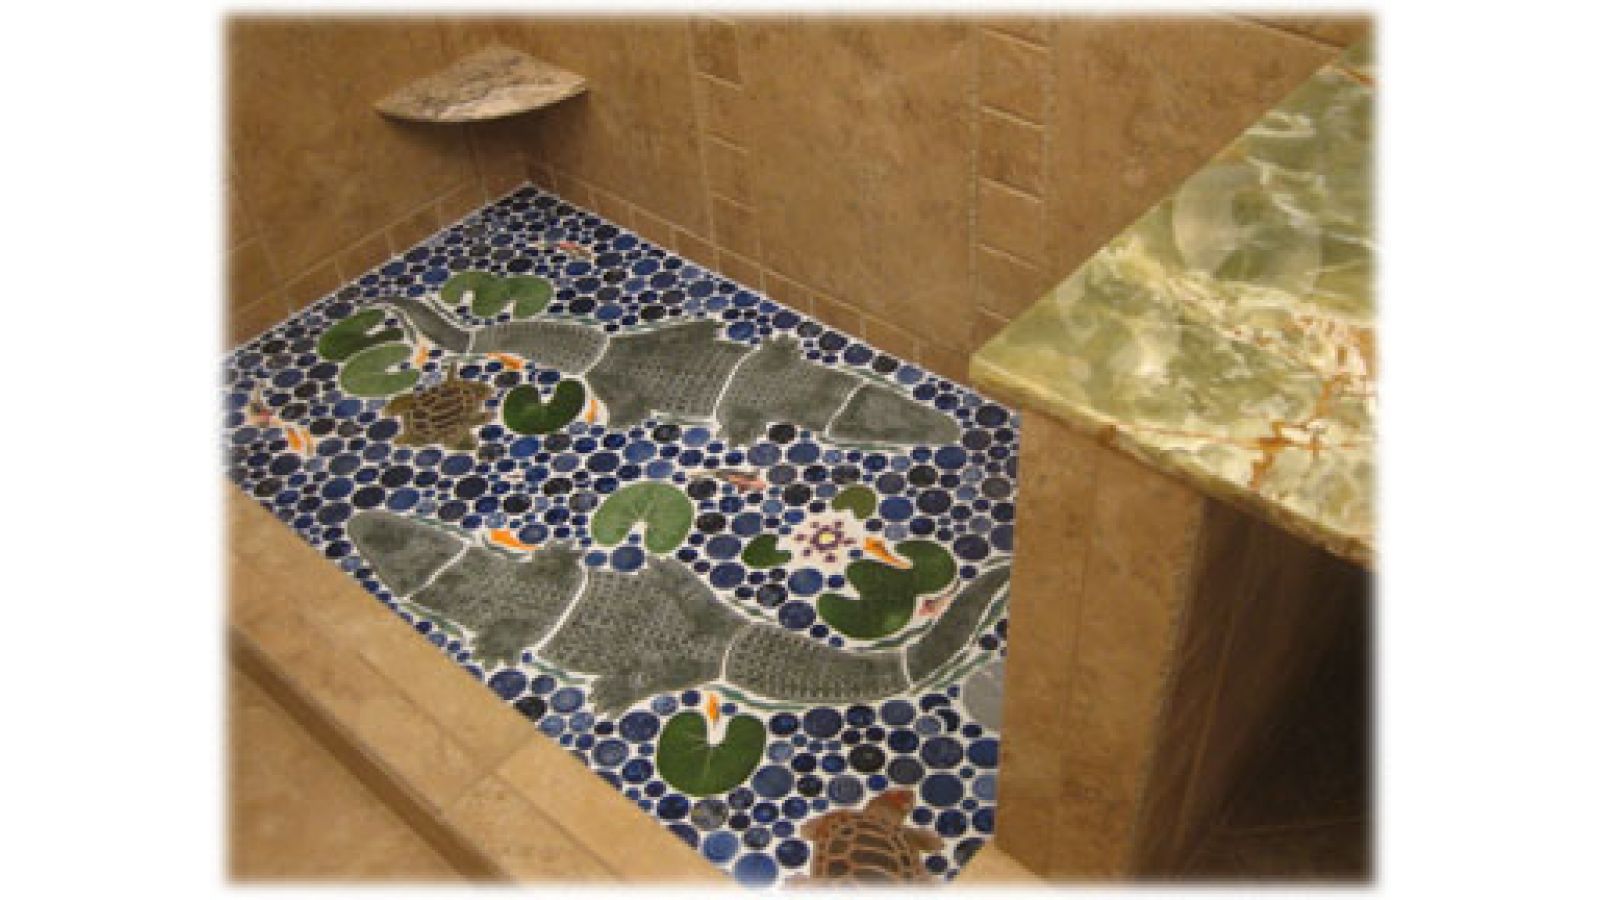 Alligator mosaic (shaped) ceramic tile floors